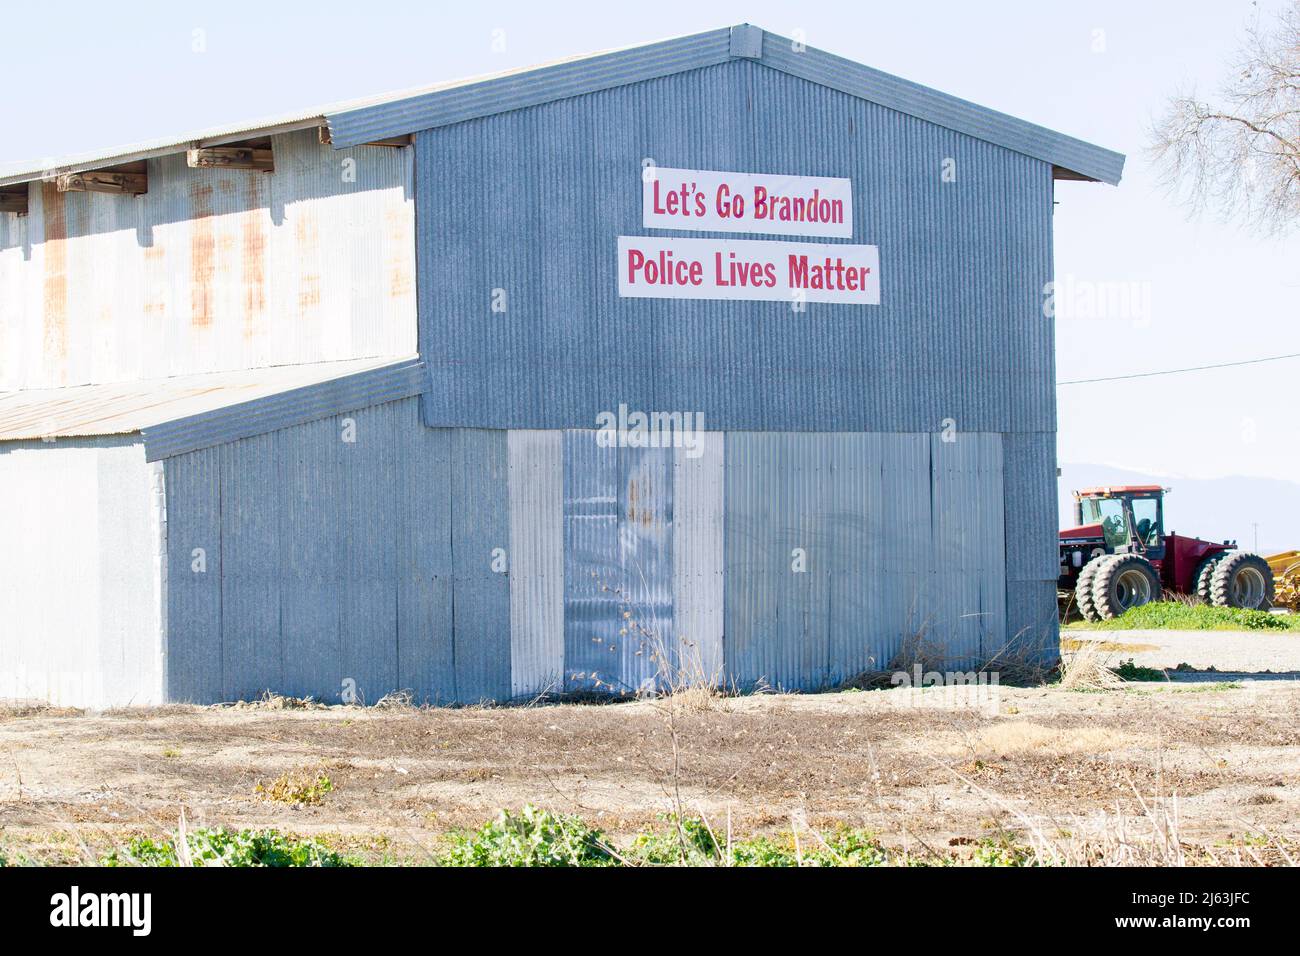 Metal Farm Building Vamos a Brandon Signo Foto de stock